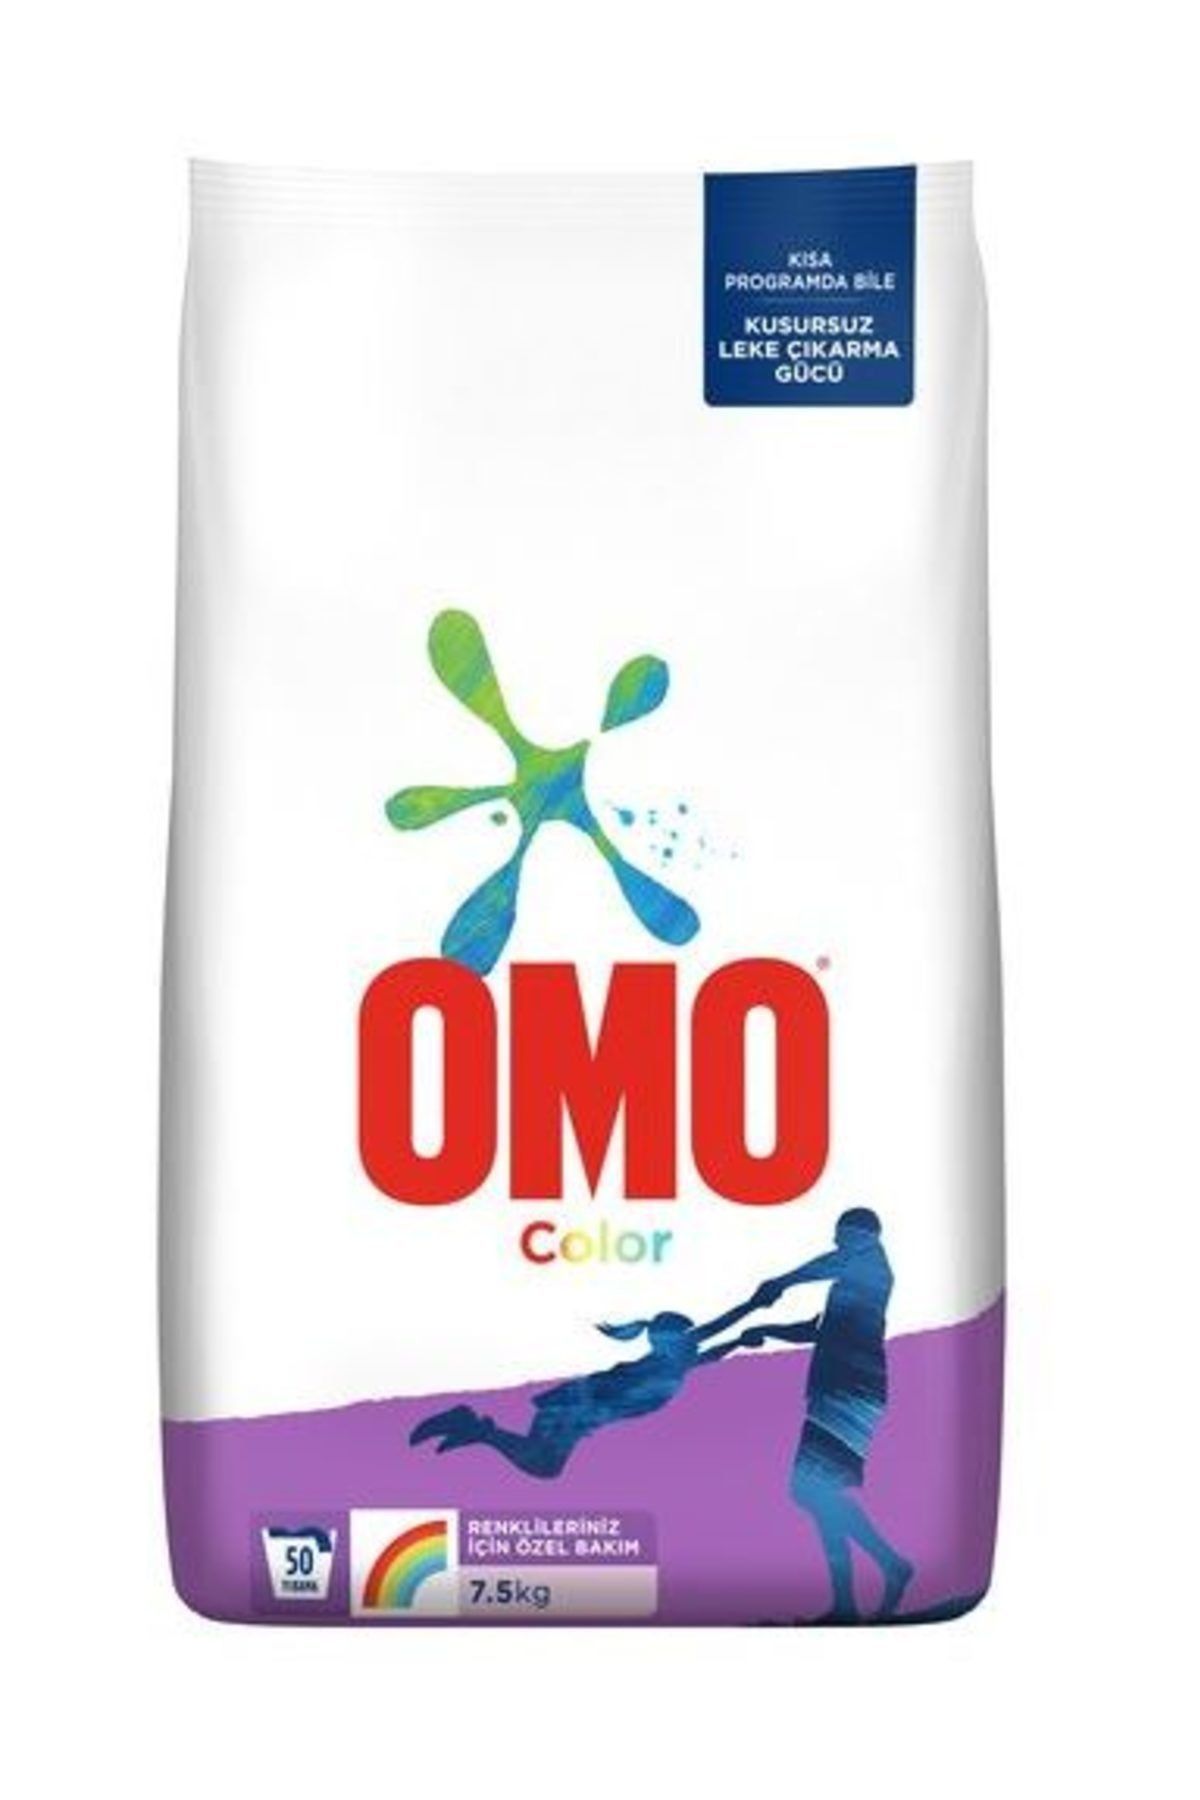 Omo Color 7.5 kg 50 Yıkama